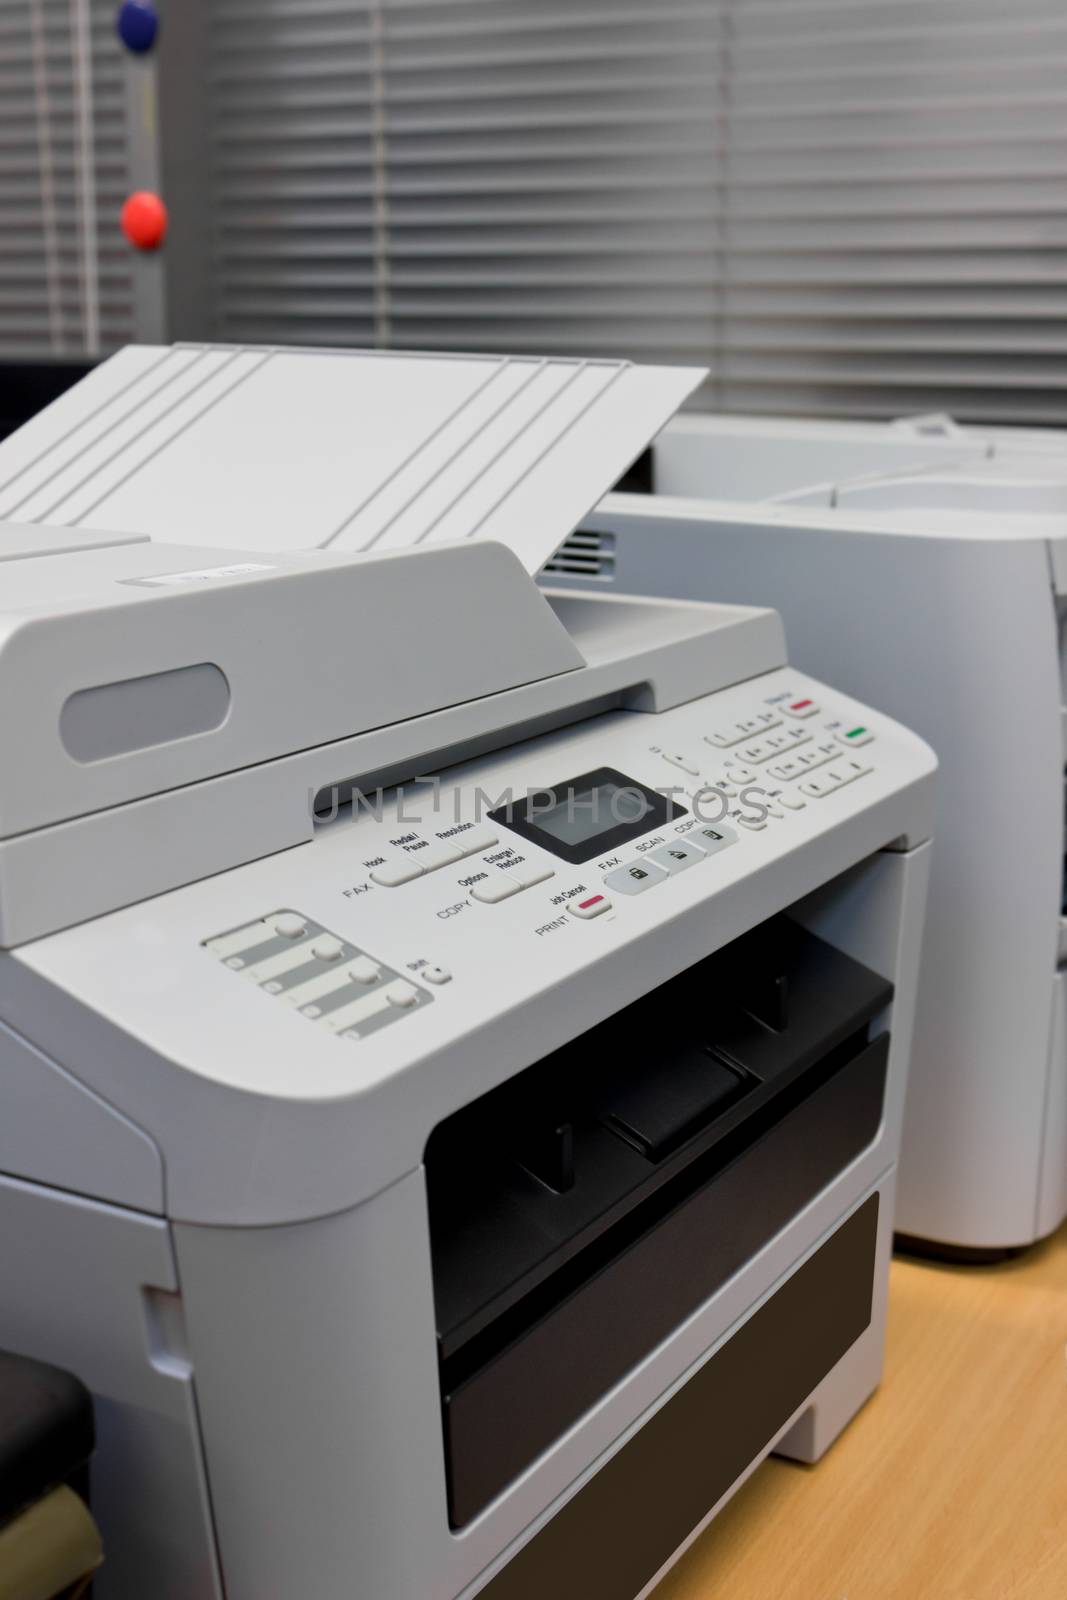 printer document in office equipment by shutterbird